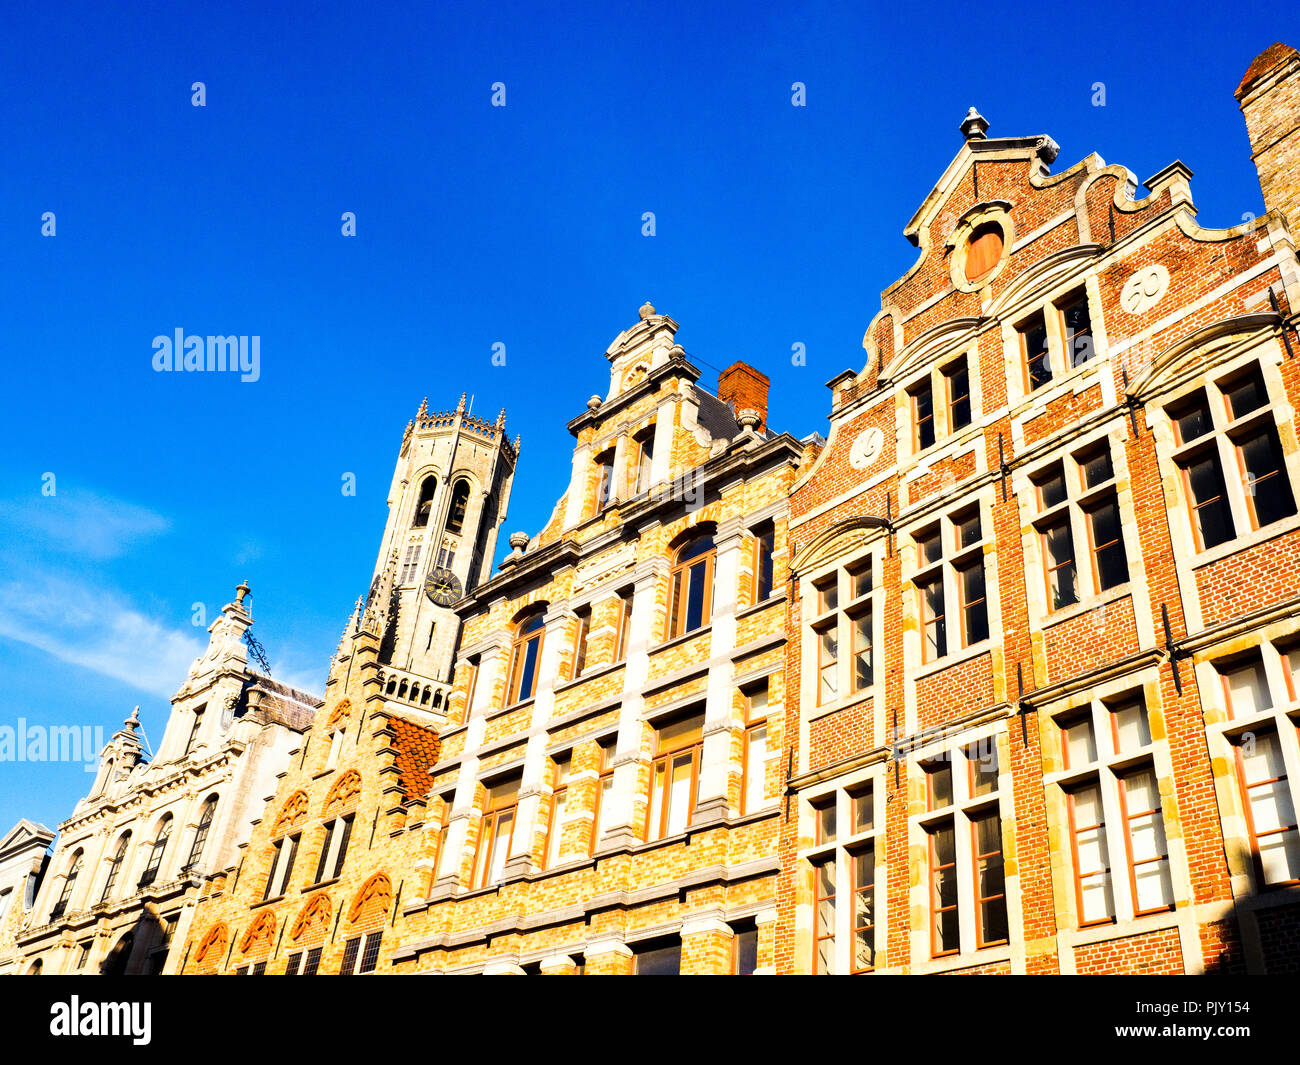 Campanile medievale e facciate di case - Bruges, Belgio Foto Stock